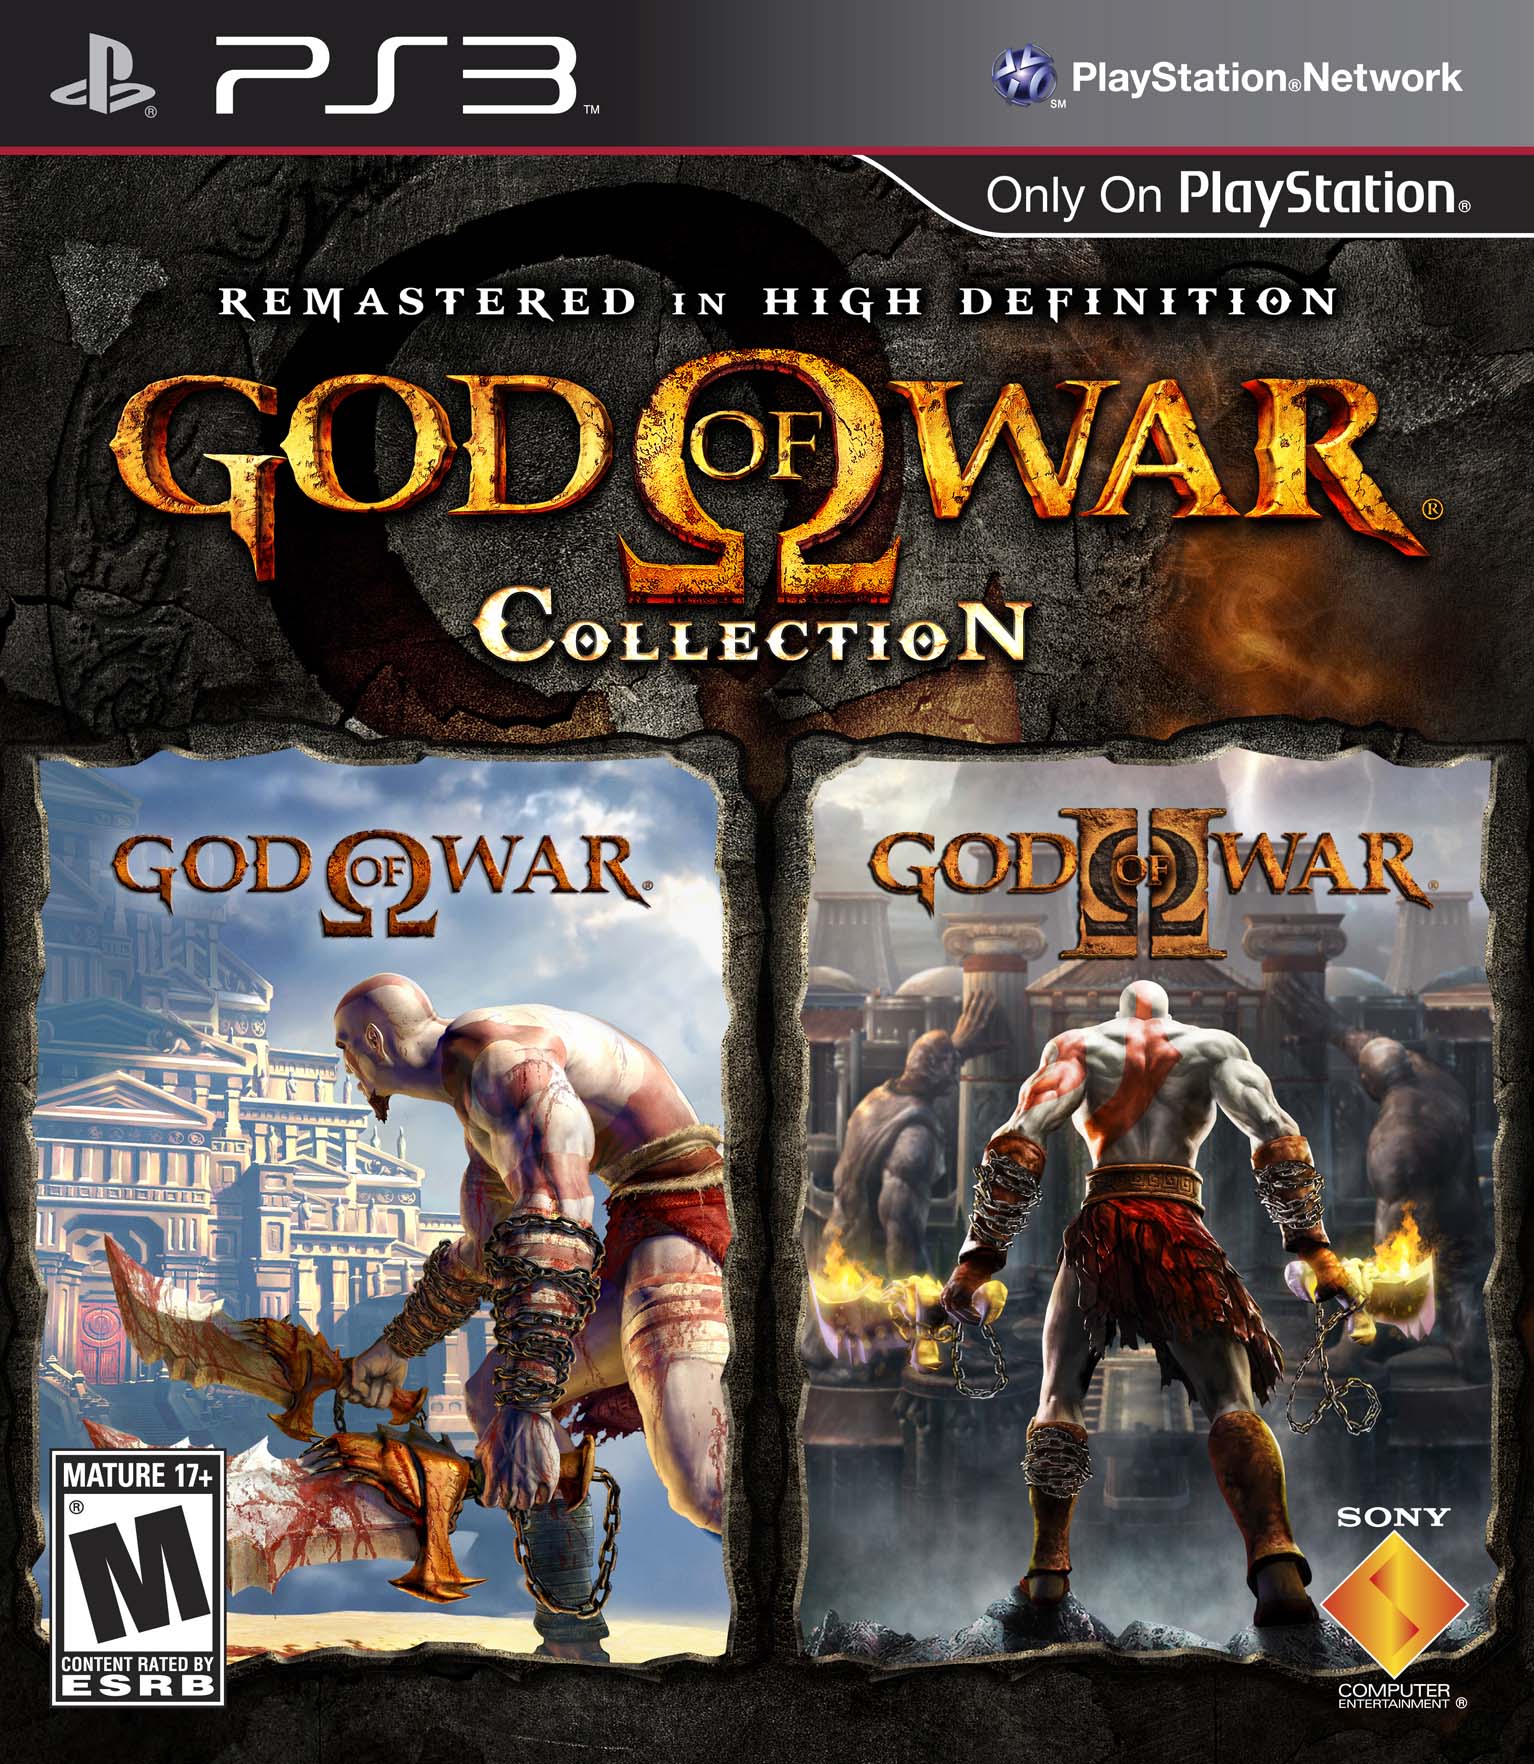 Jugar juegos de computadora demanda veinte God of War Collection | God of War Wiki | Fandom